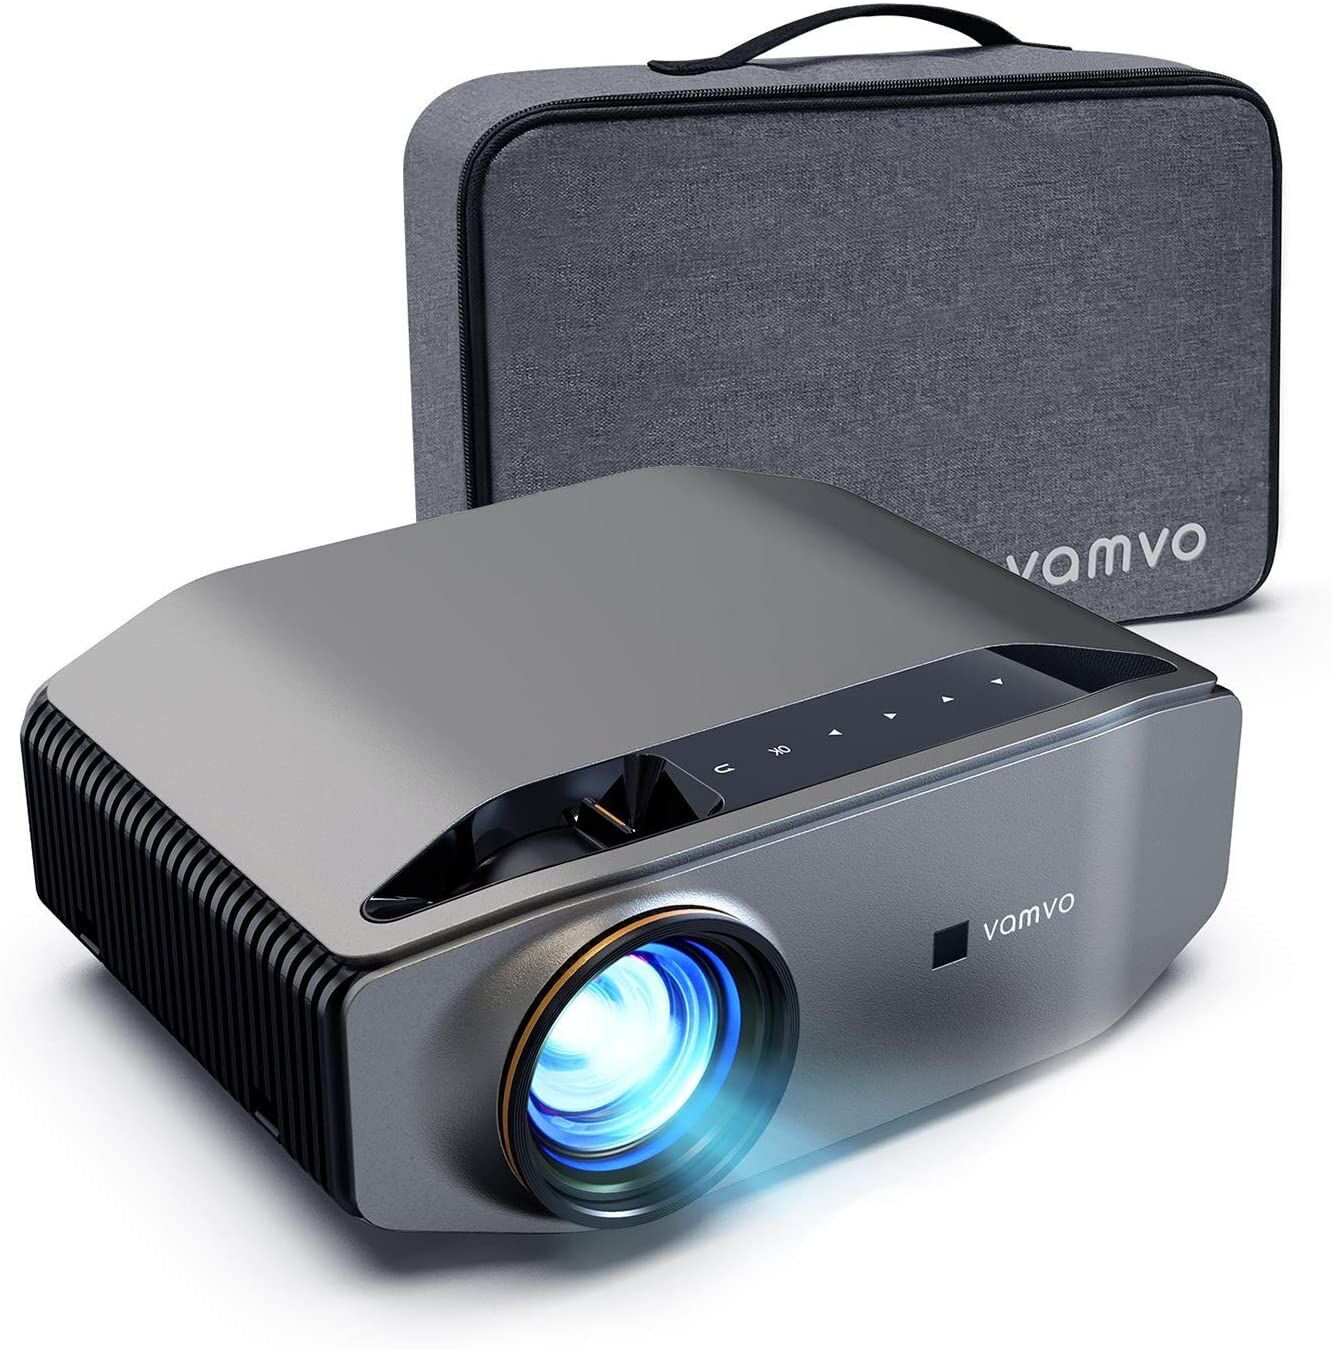 Vamvo L6200 1080p projector